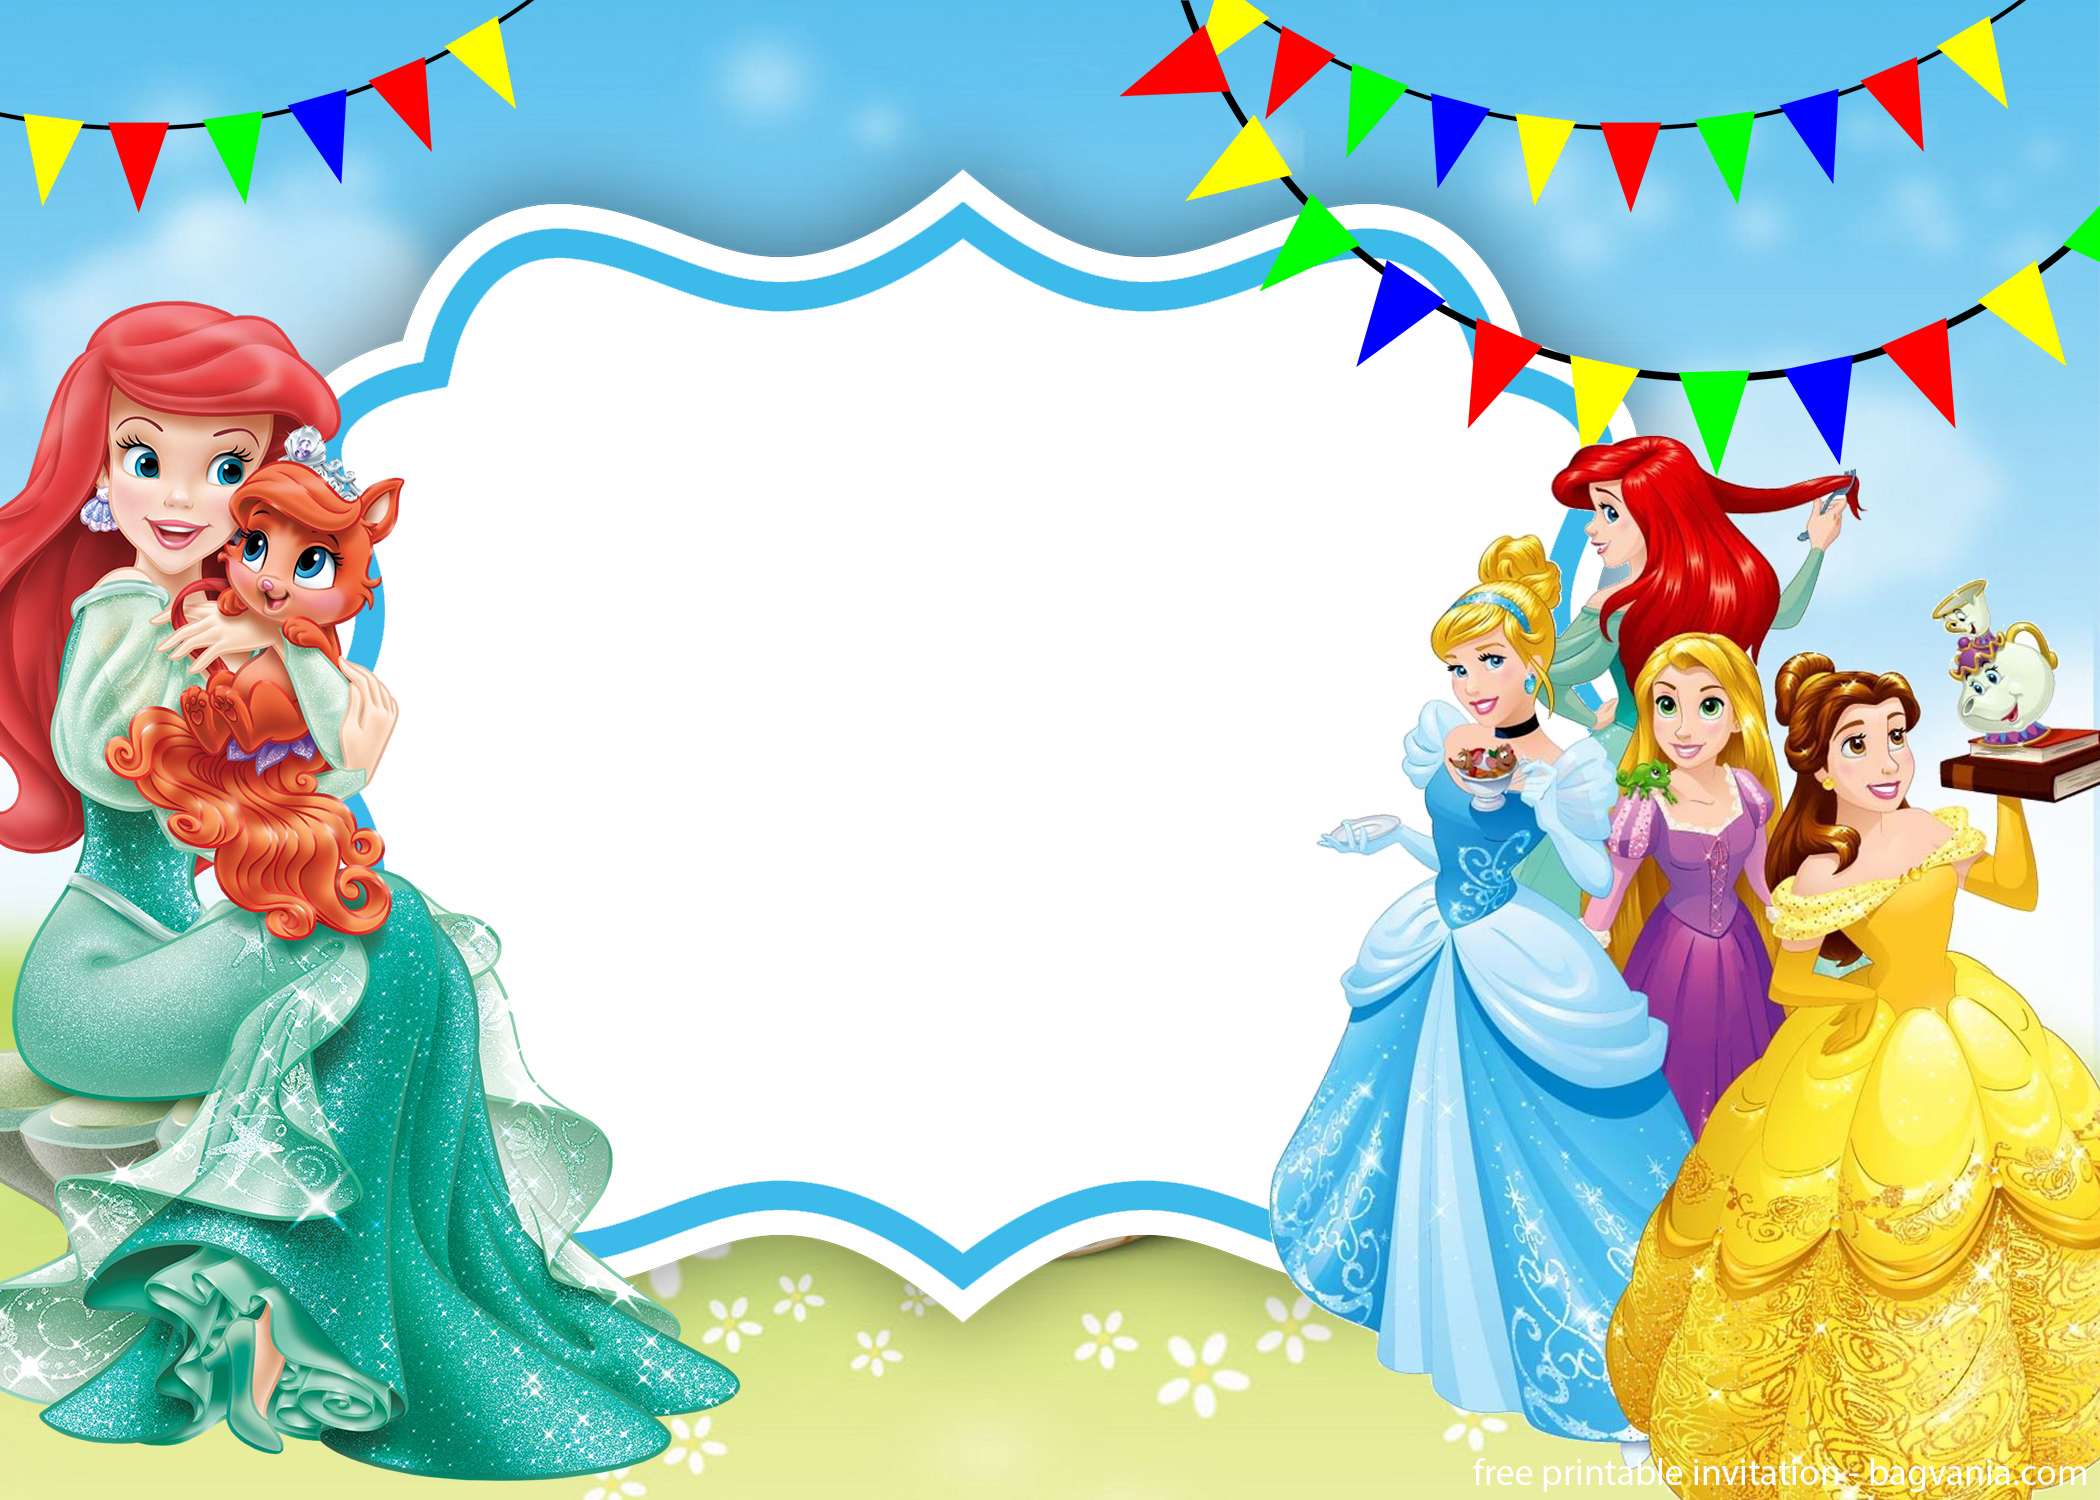 golden-disney-princesses-invitation-template-free-printable-birthday-invitation-templates